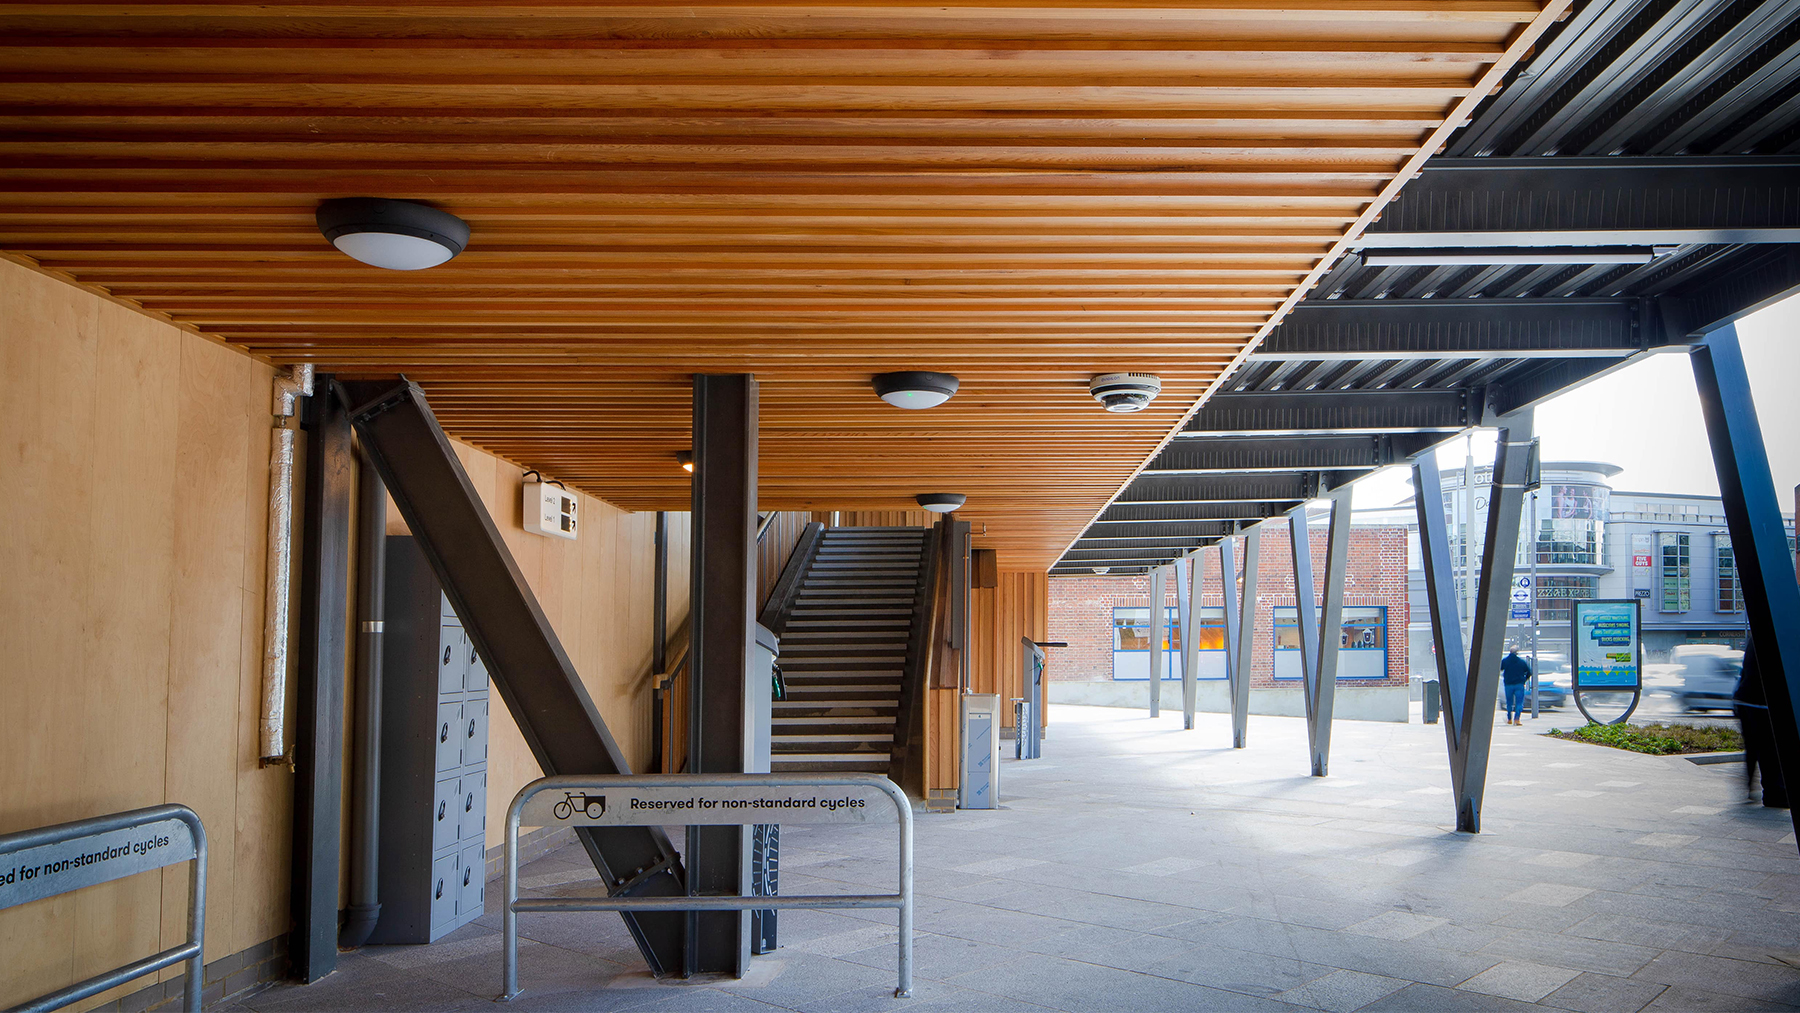 Sarah-Wigglesworth-Architects Kingston-Go-Cycle Hub Ground Floor  1800x1013